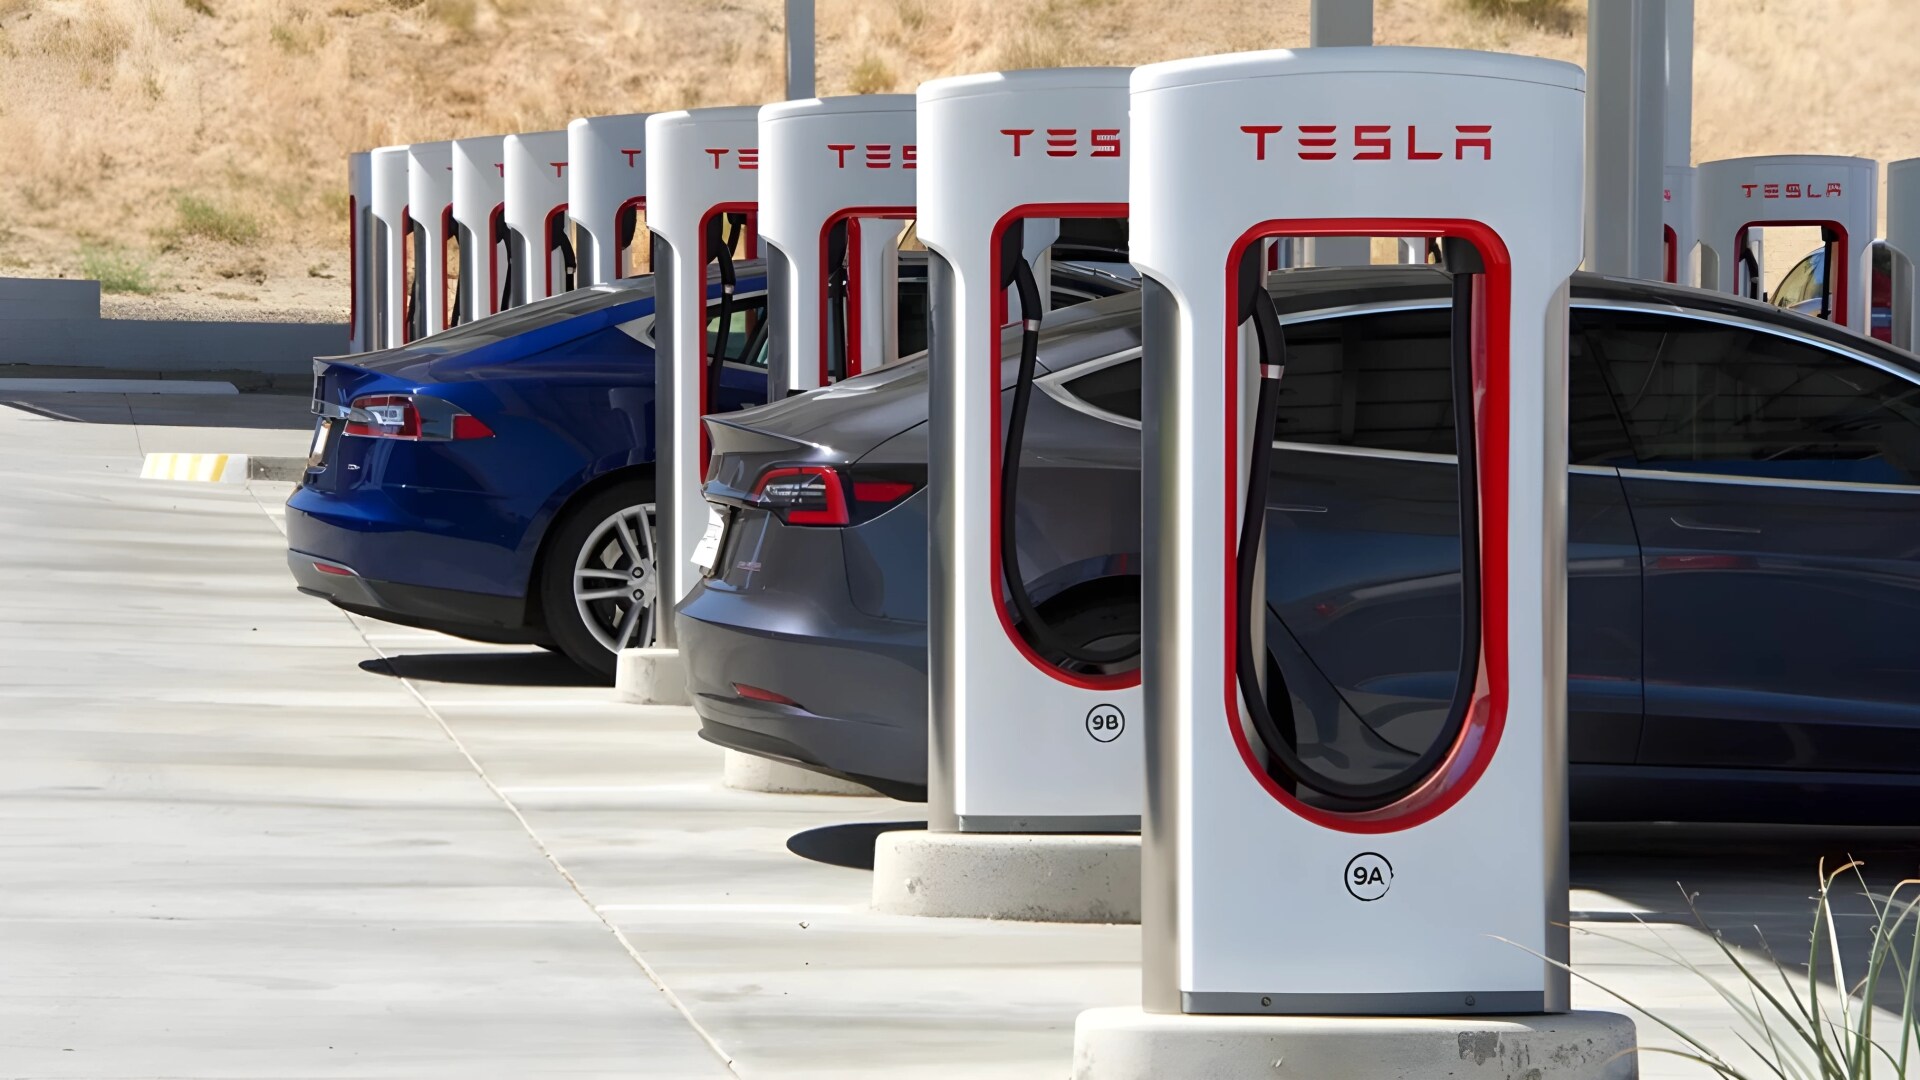 Tesla's Super Charging Station In Kettleman City, California (Credits: Sheila Fitzgerald)